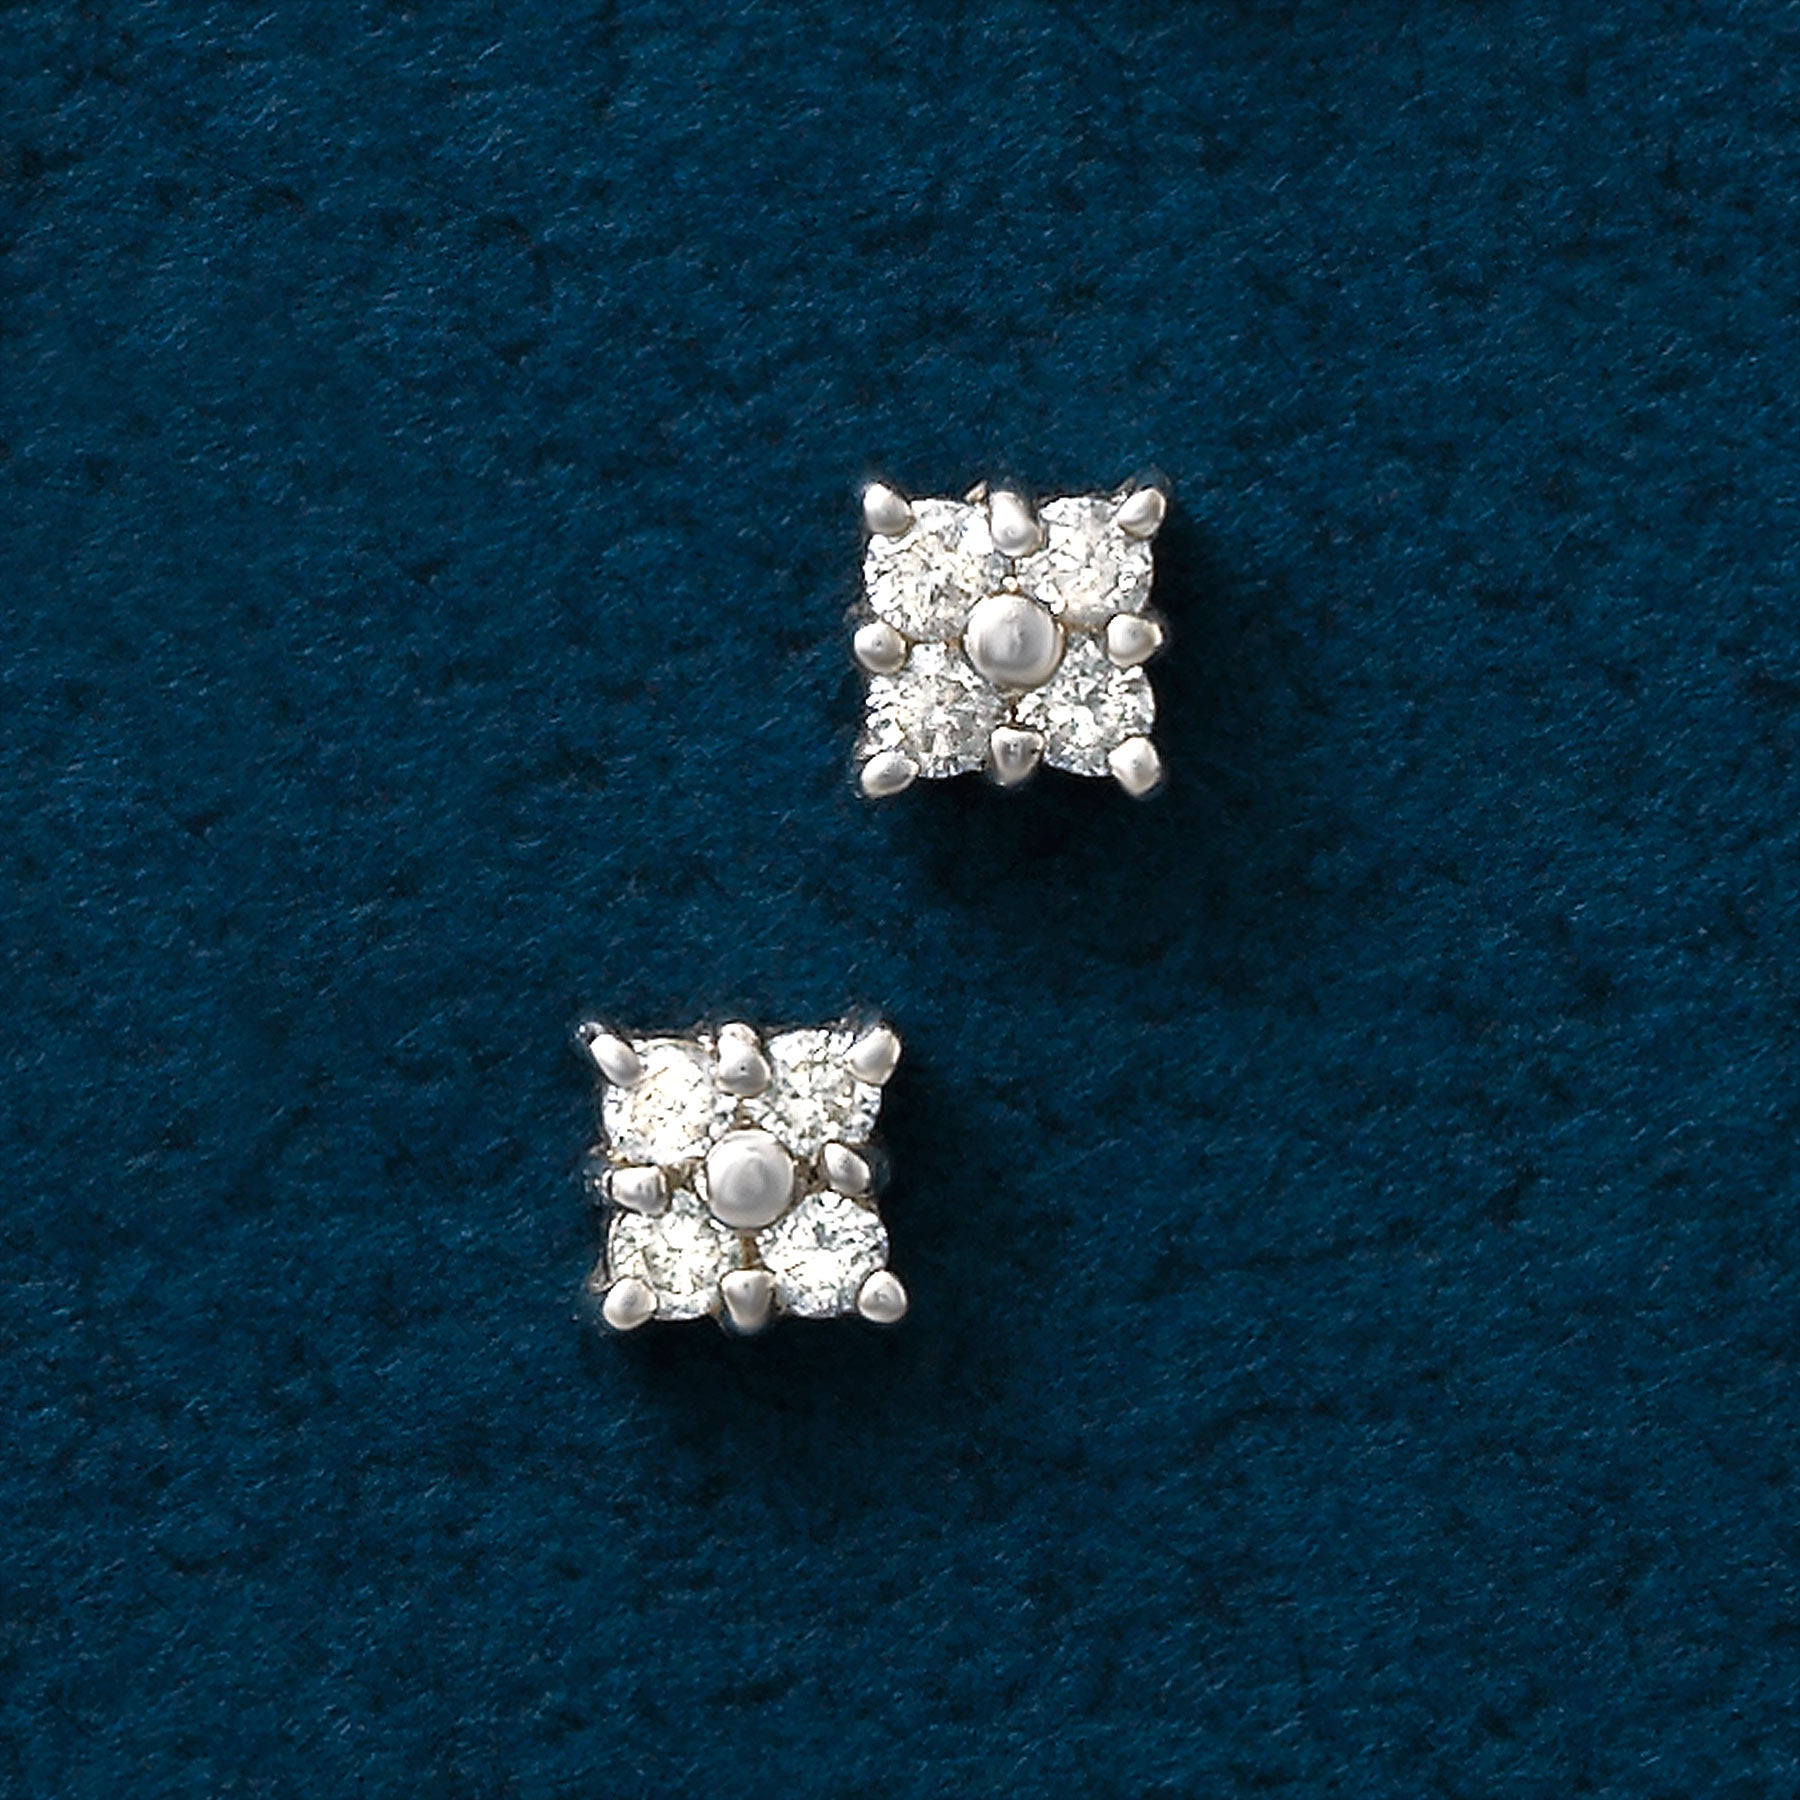 14K White Gold Diamond Square Earrings - Product Image